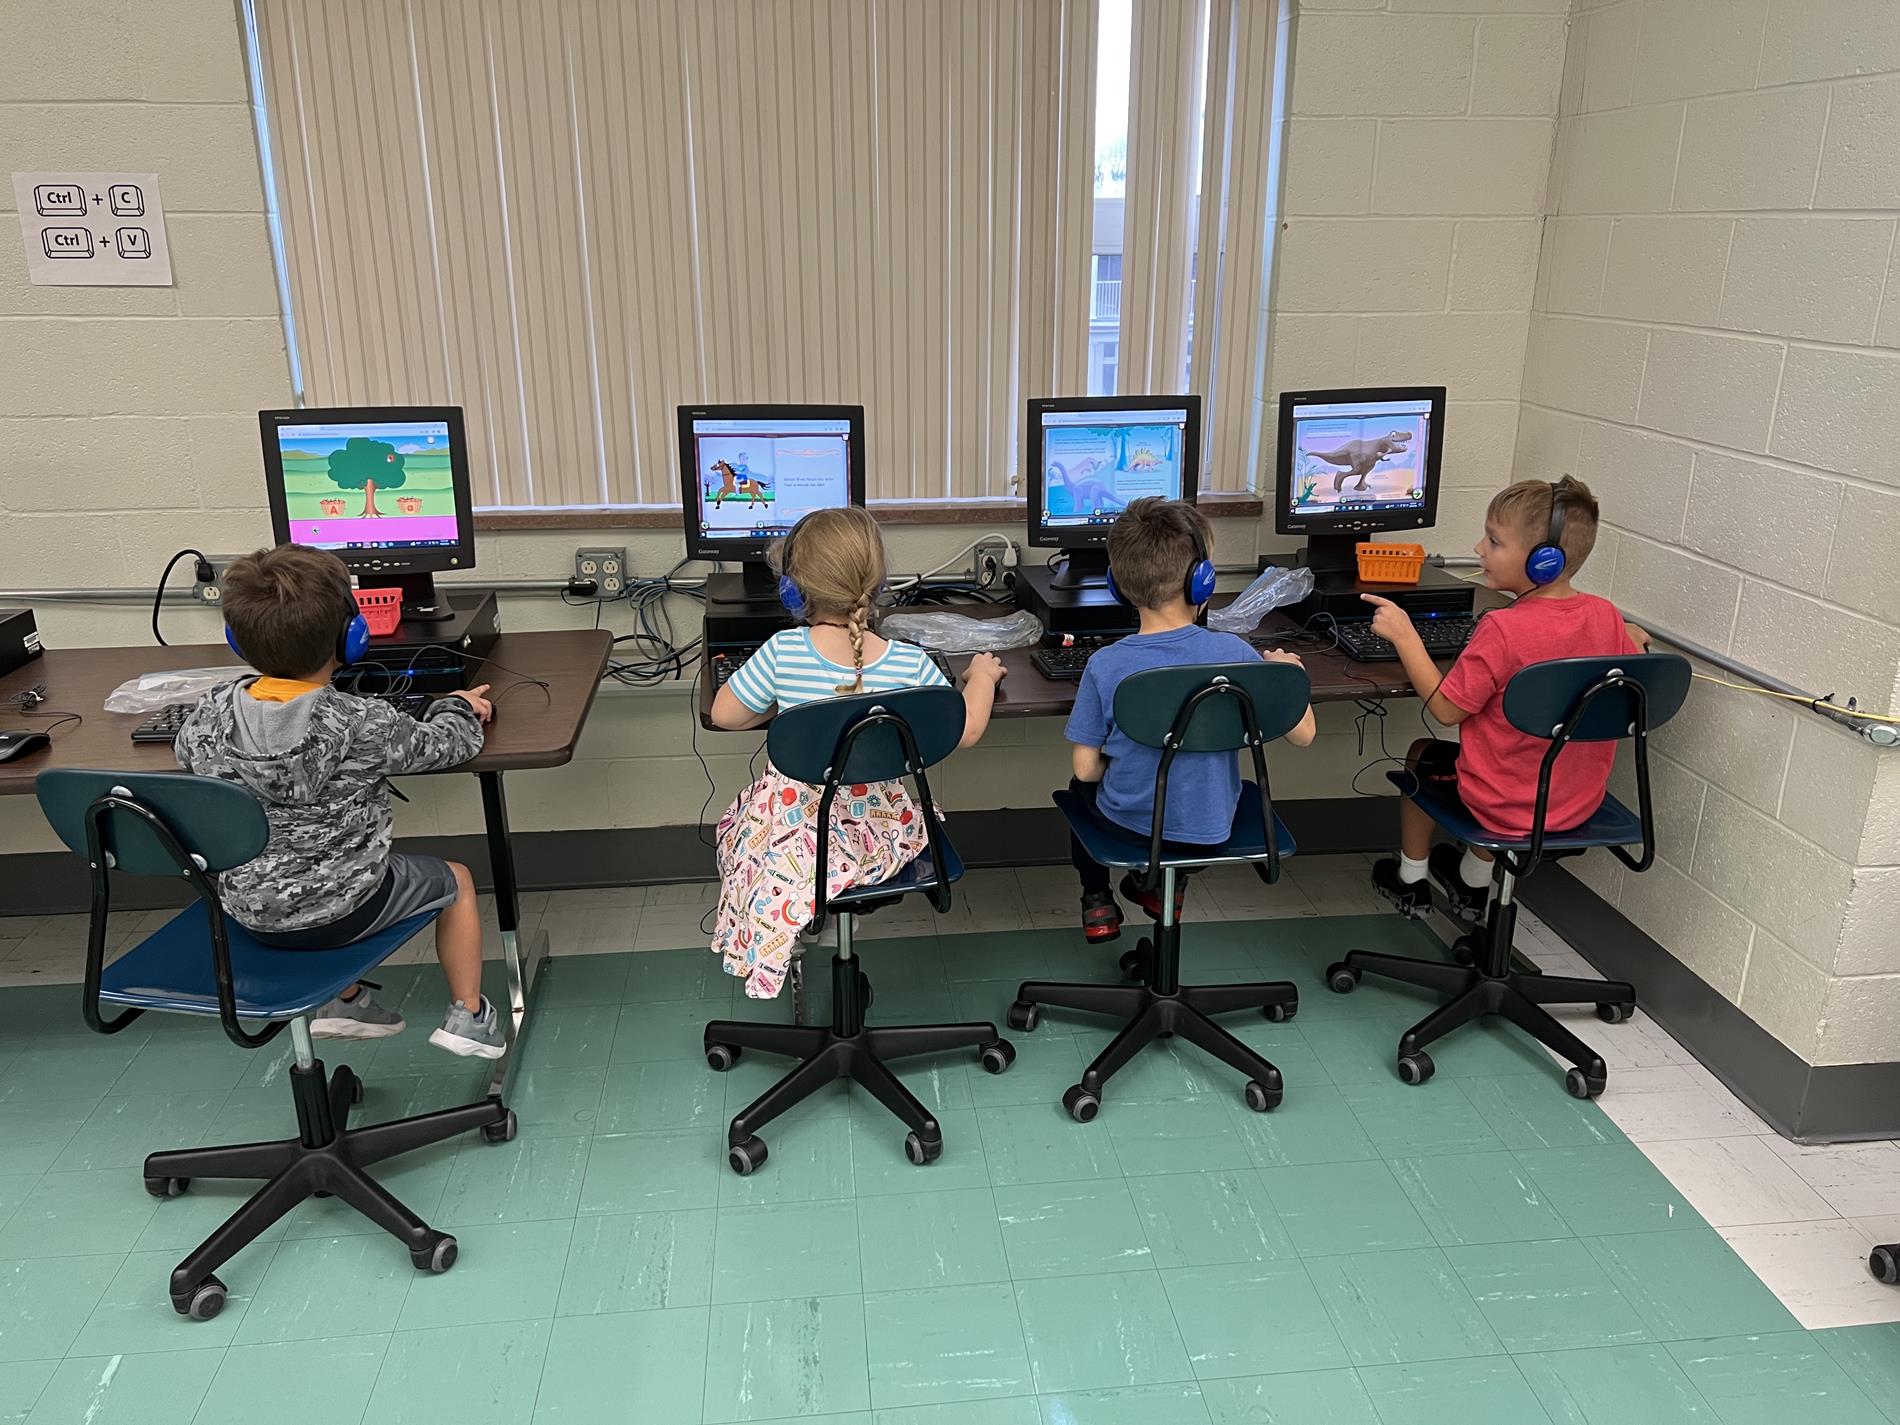 4 children working on computers